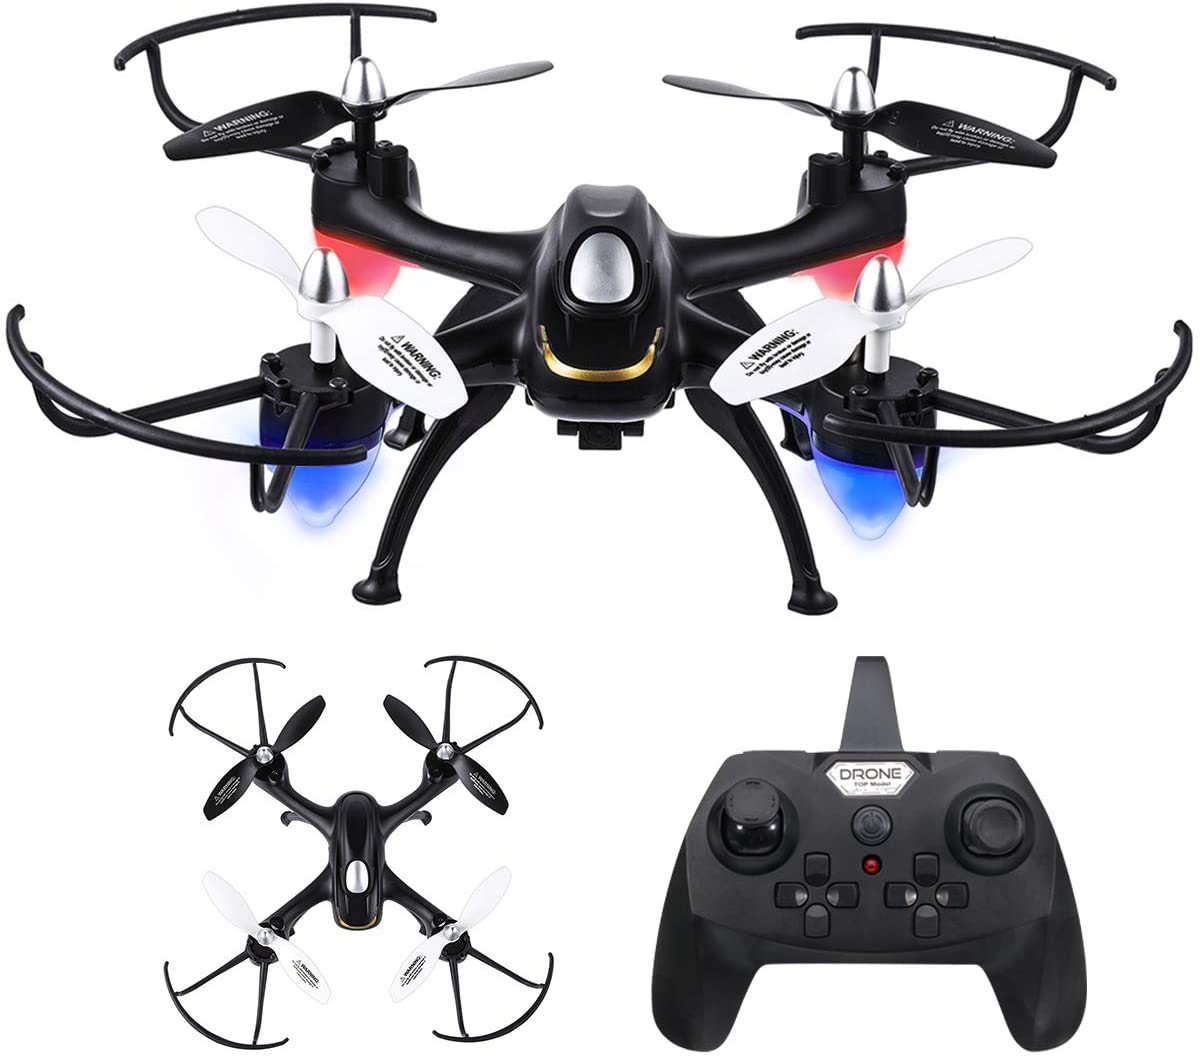 Quadcopter Drone with 2.0 MP HD Camera$29.995 (REG $59.99)